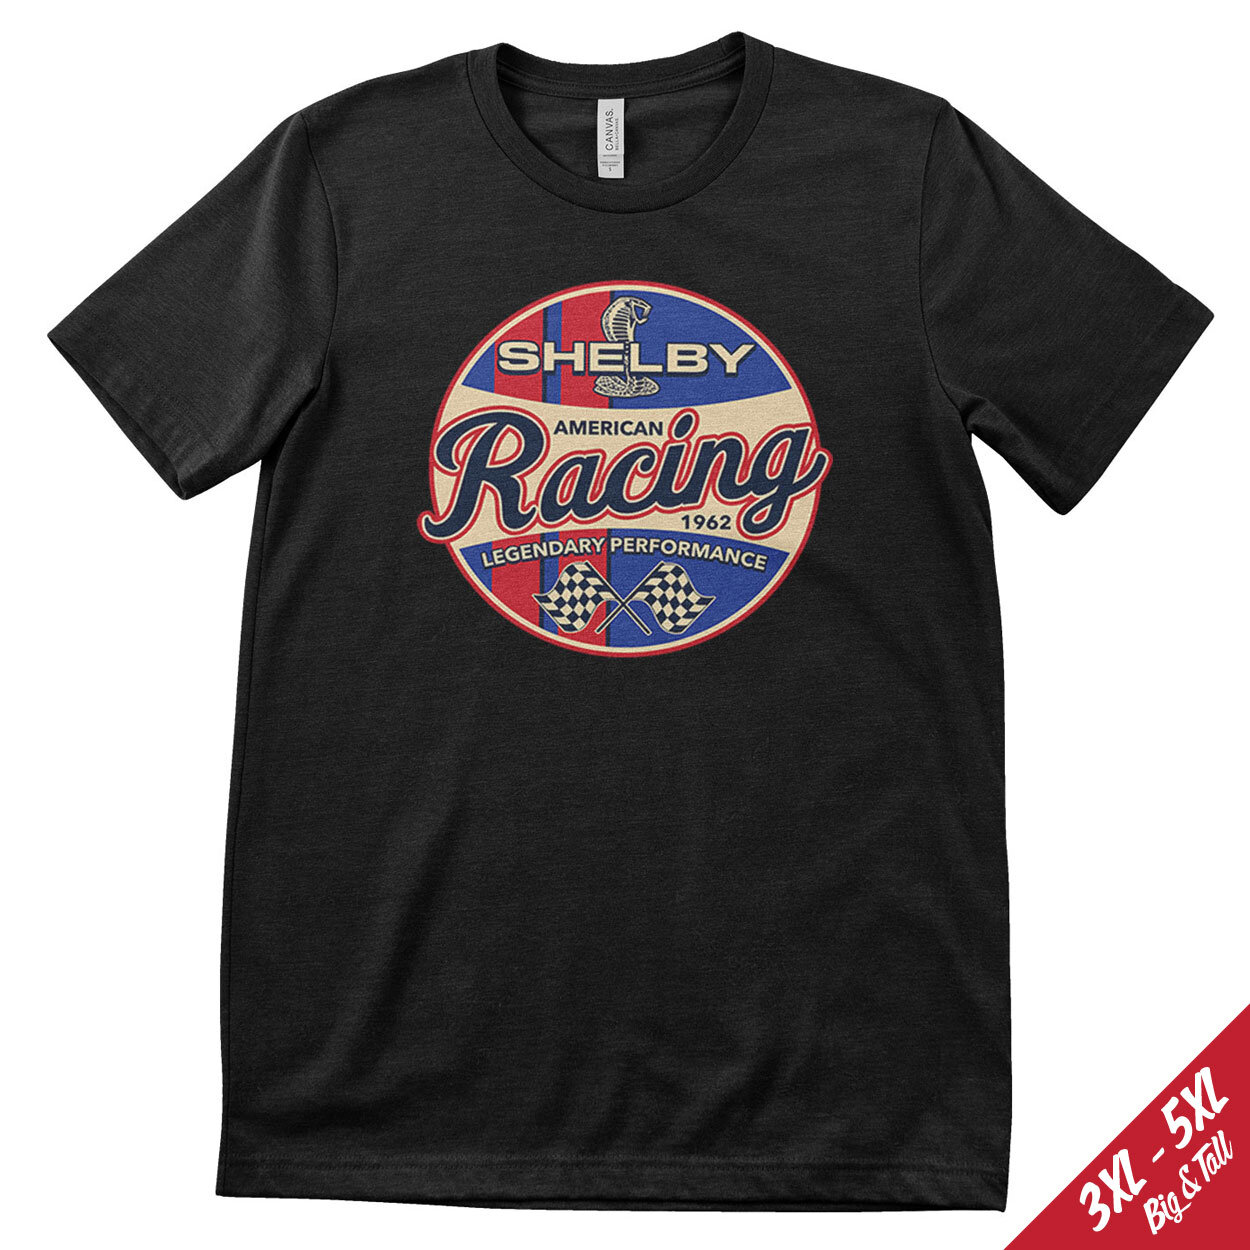 Shelby Racing Big & Tall T-Shirt